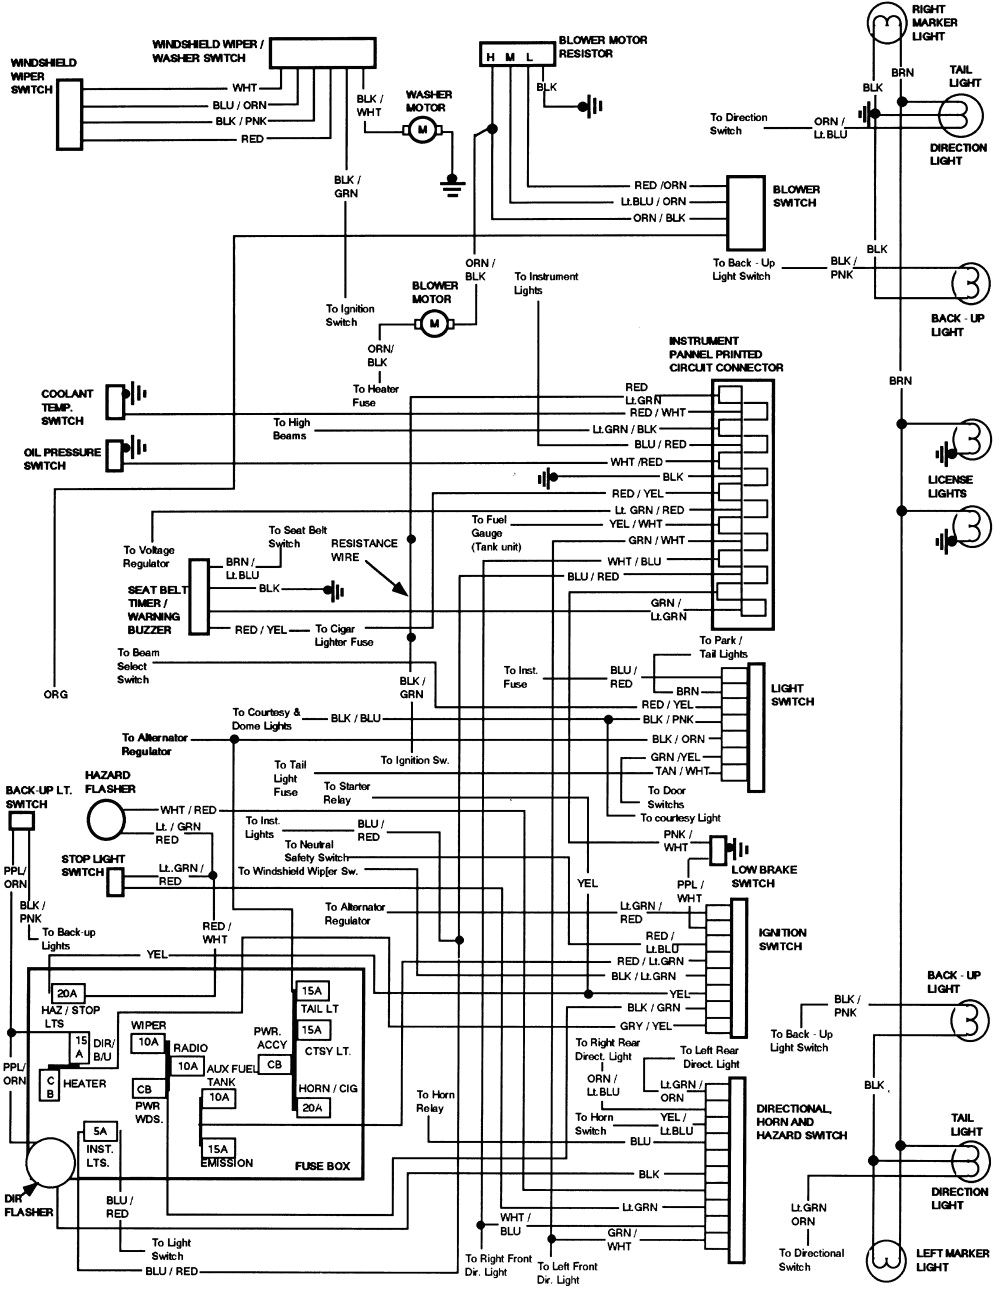 ford f150 fan wiring diagram wiring diagram secrets wire diagram for fan on 1990 ford trucks